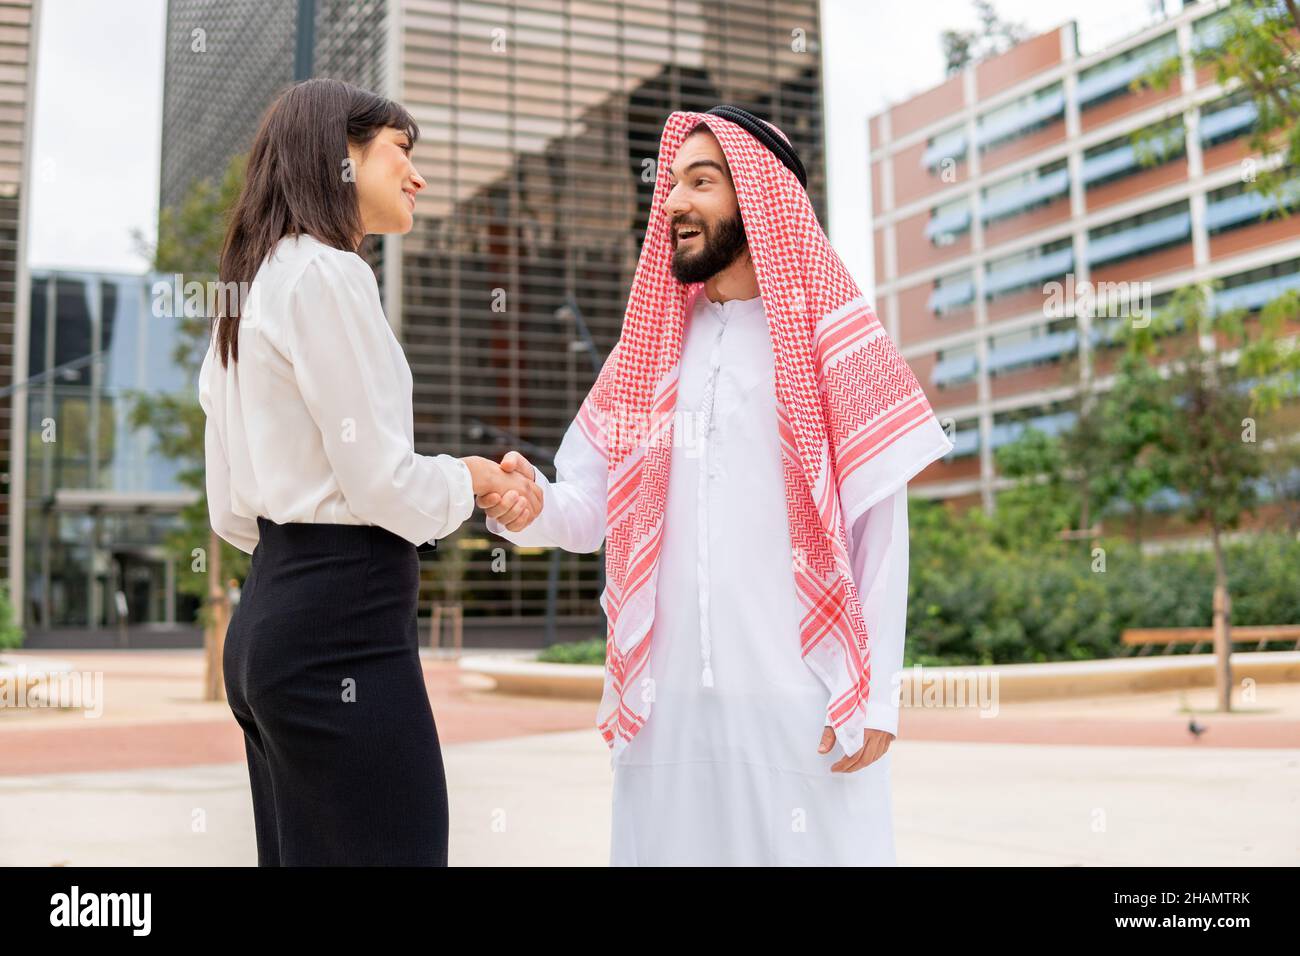 Handshake of arab sheikh man and european business woman, diverse